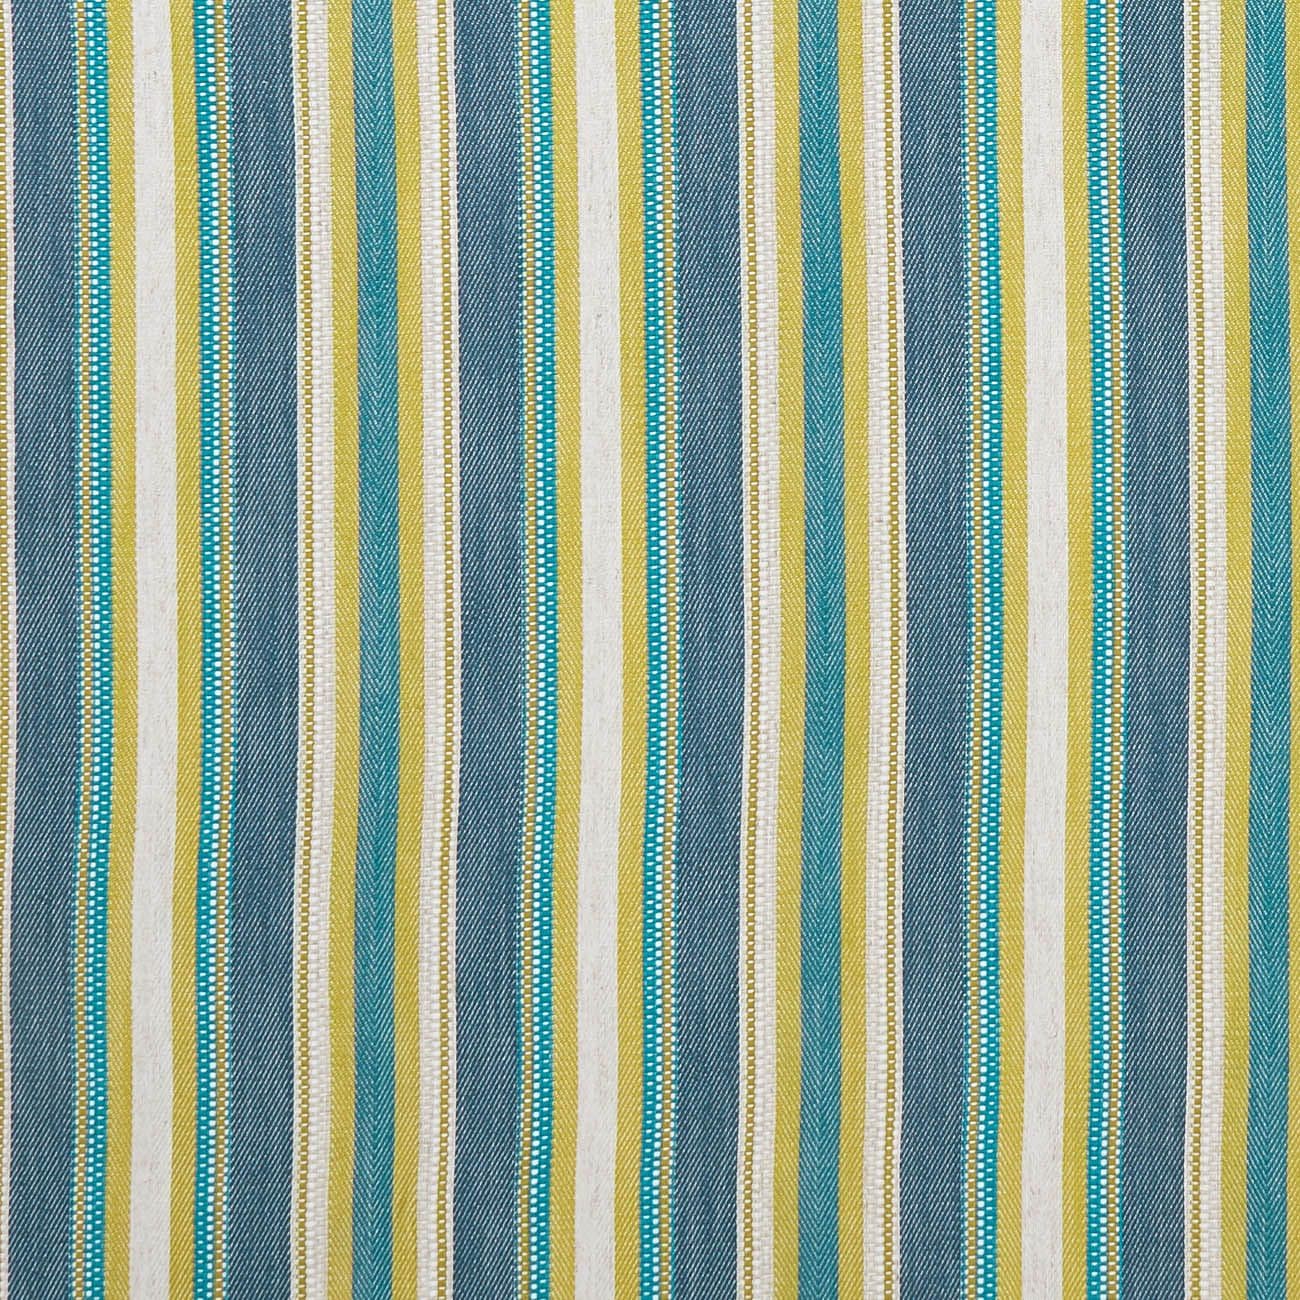 Clarke and Clarke Ziba Fabric in Denim/Chartreuse